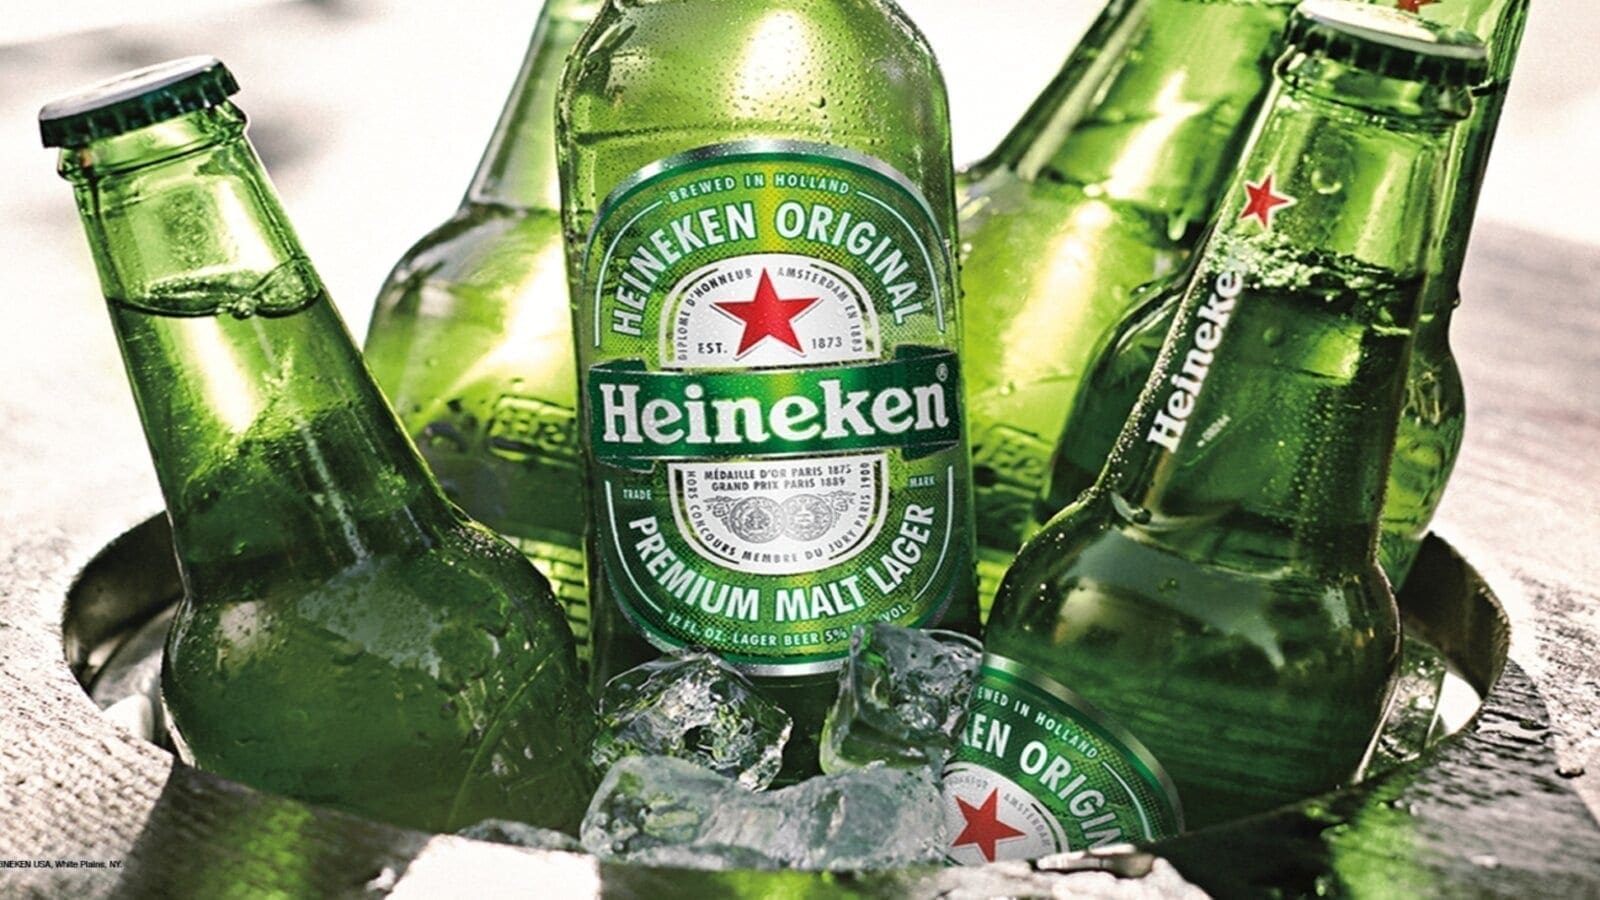 Heineken opposes US$16m compensation bill to Kenyan alcohol distribution firm Maxam Ltd